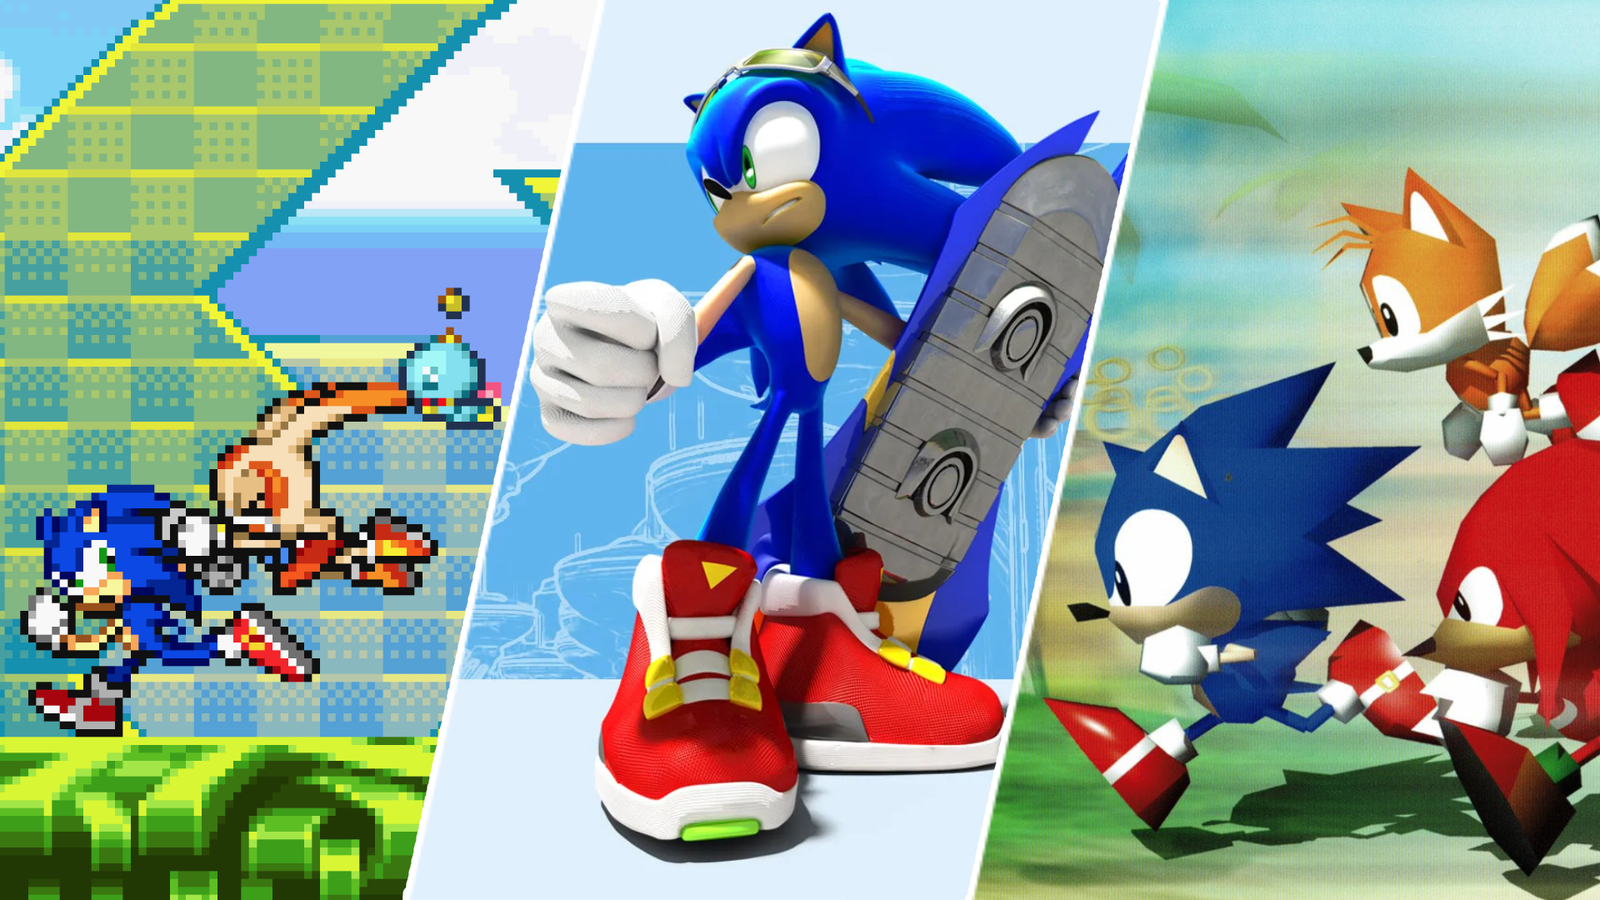 Sonic Adventure 2 Battle Nintendo GameCube Game Disc Case Adventures  Hedgehog